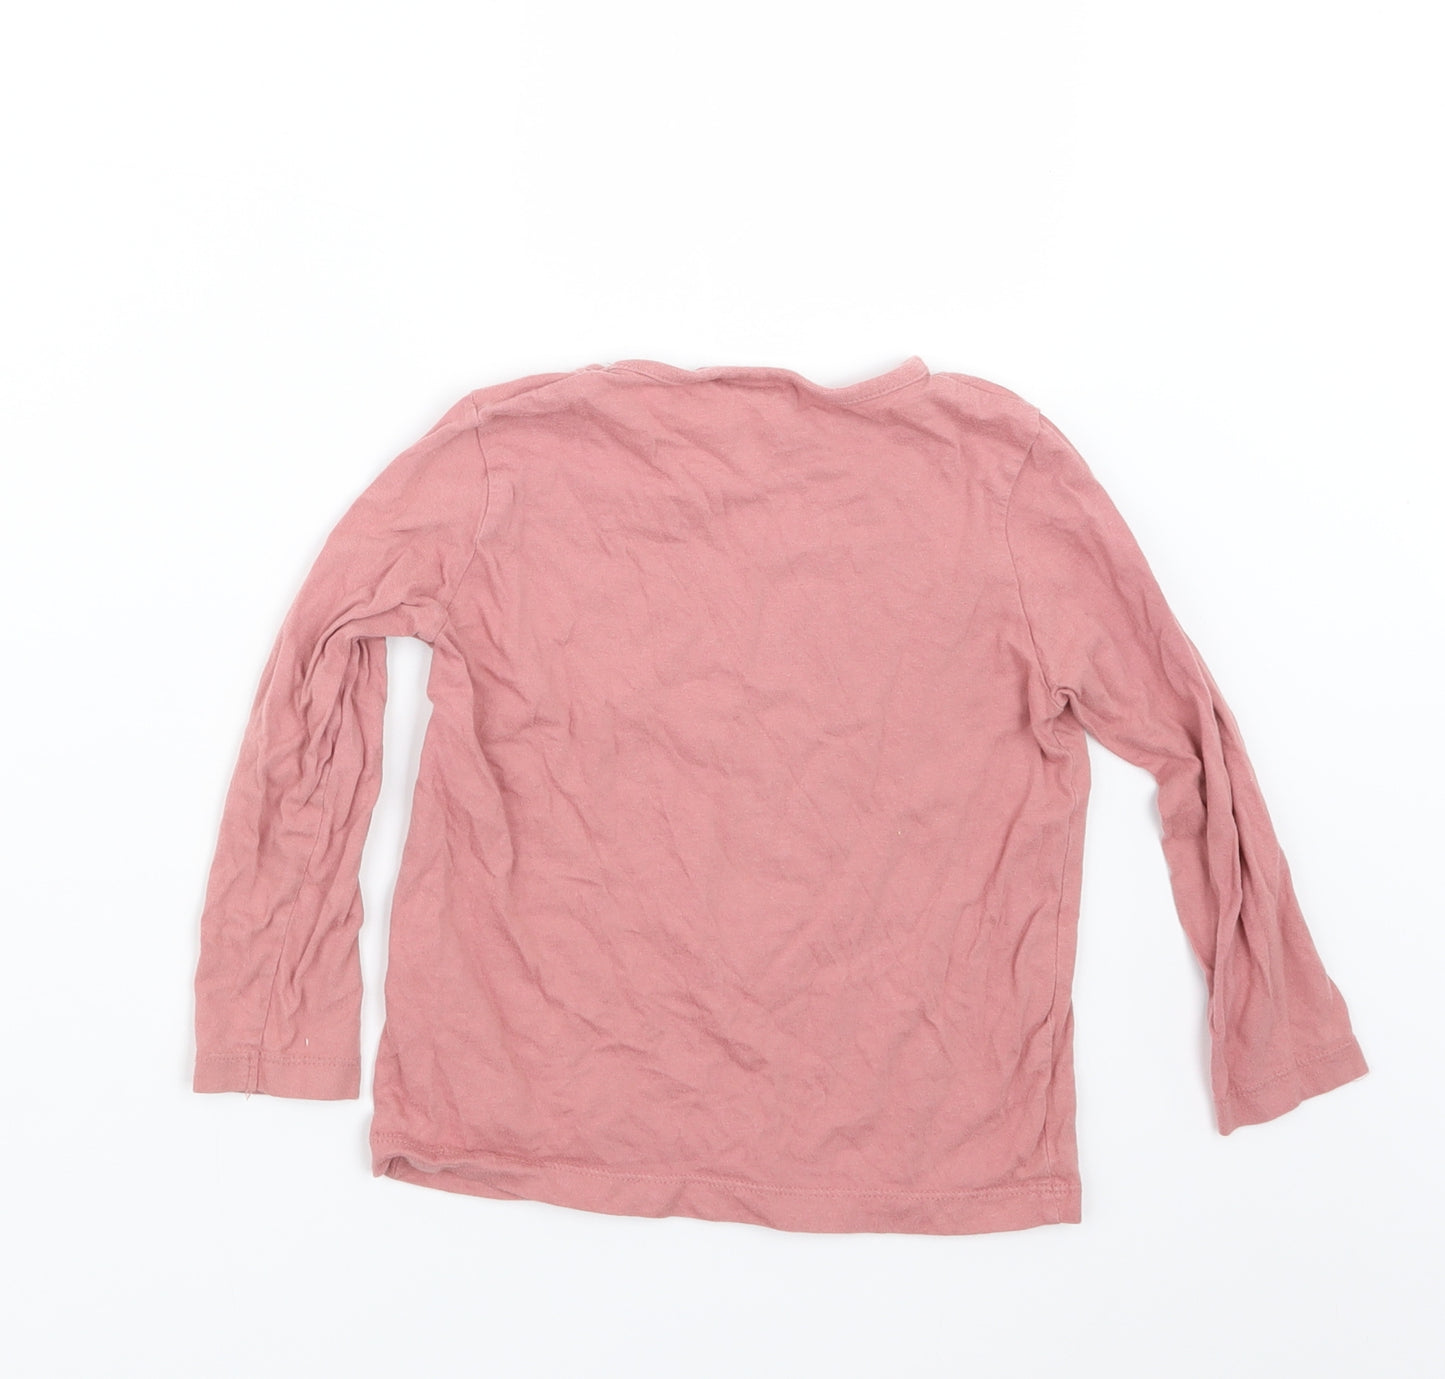 Primark Girls Pink Geometric  Top Pyjama Set Size 3-4 Years  - Minnie Mouse